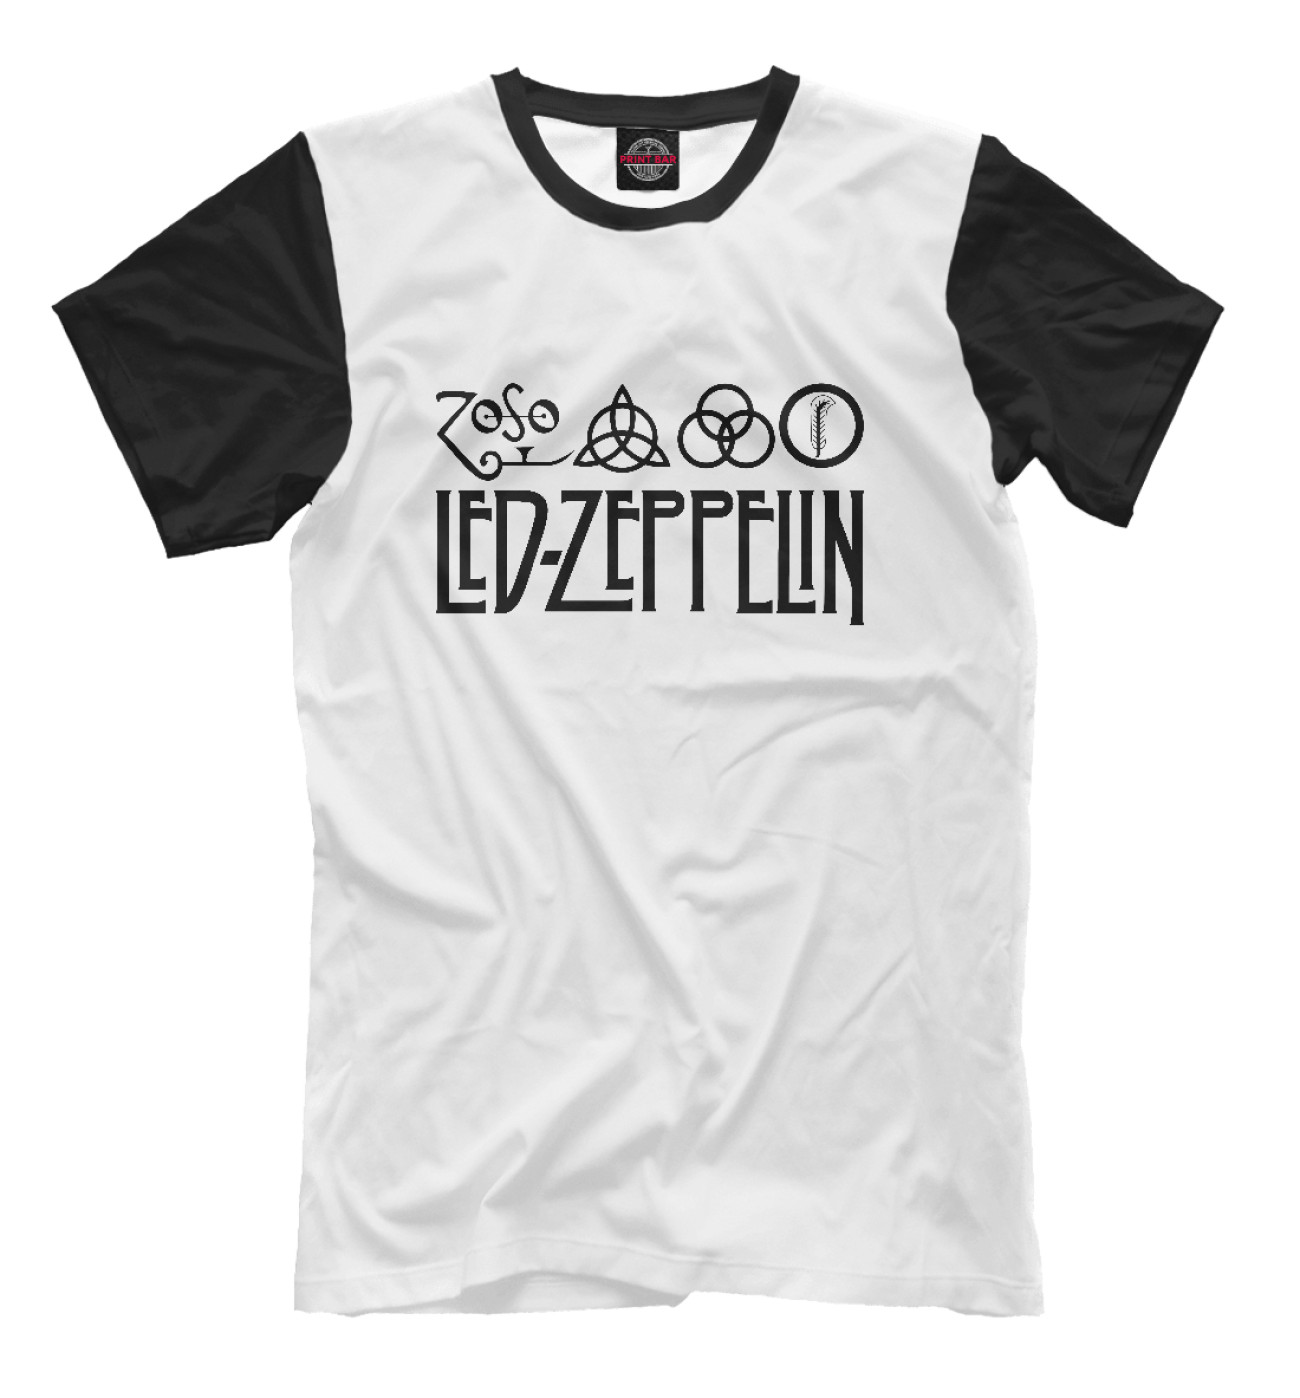 Мужская Футболка Led Zeppelin, артикул: LDZ-599030-fut-2